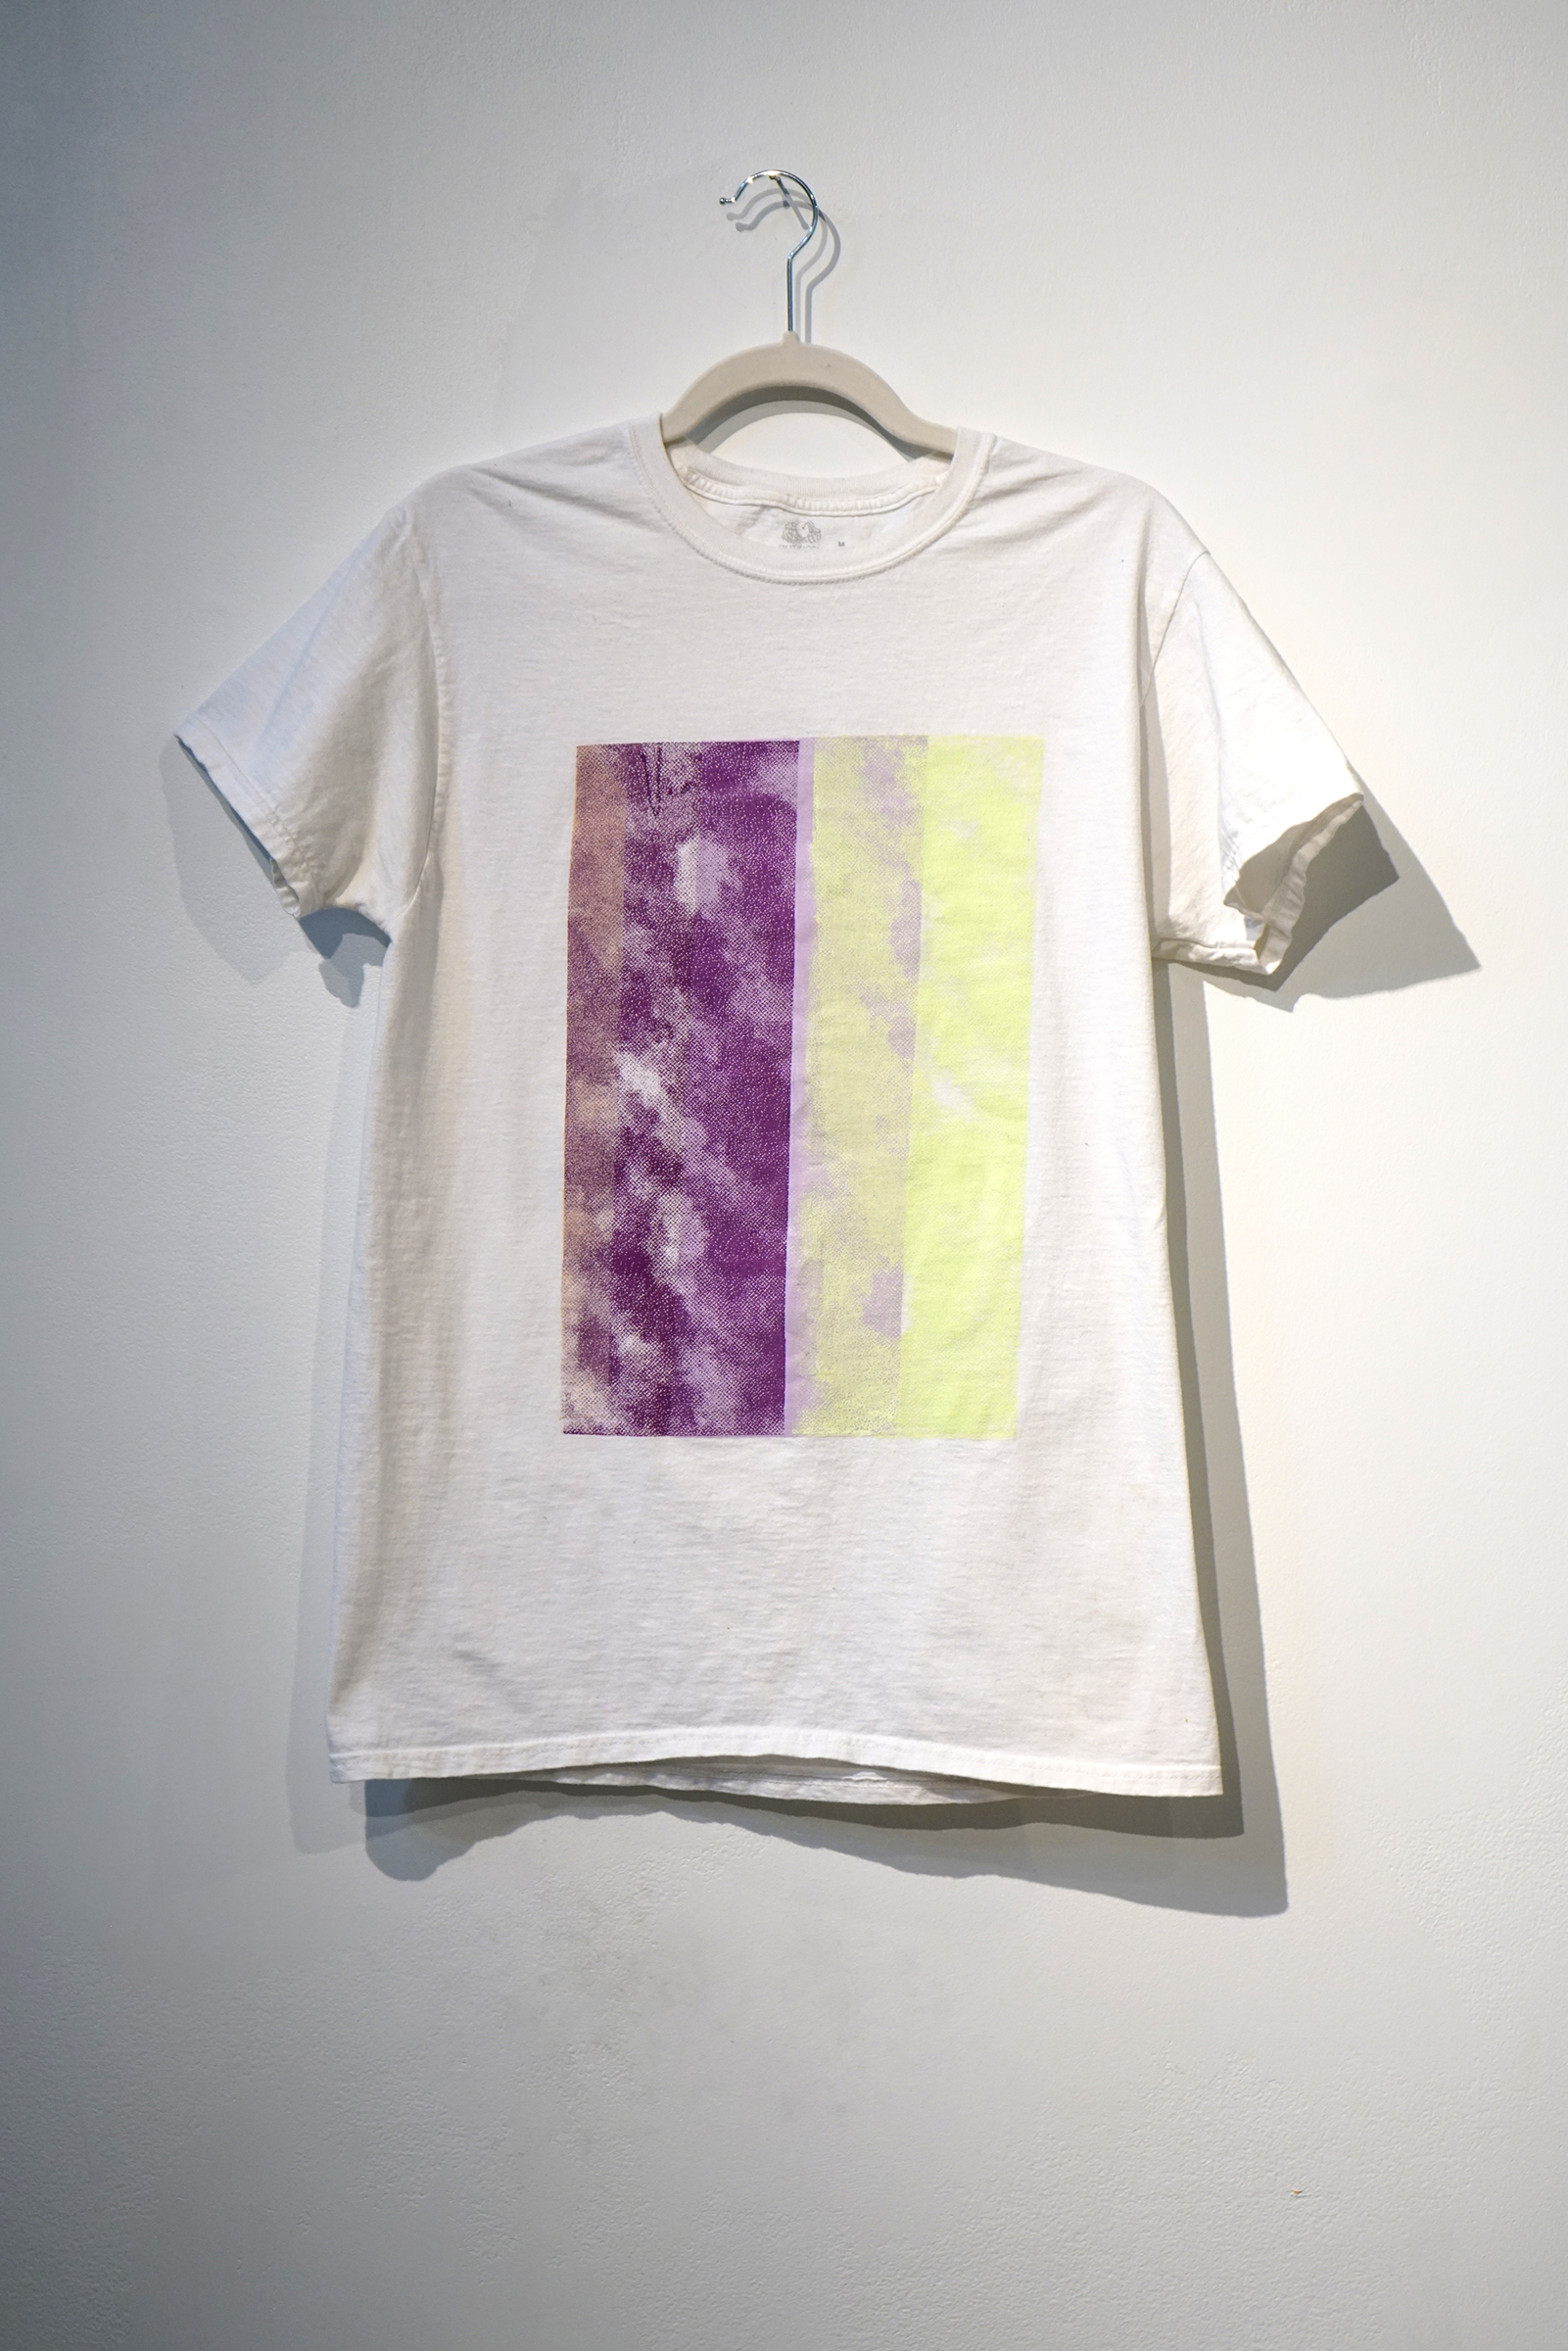 Shirt 3, screenprint on upcycled clothing by Rachel Carboni.